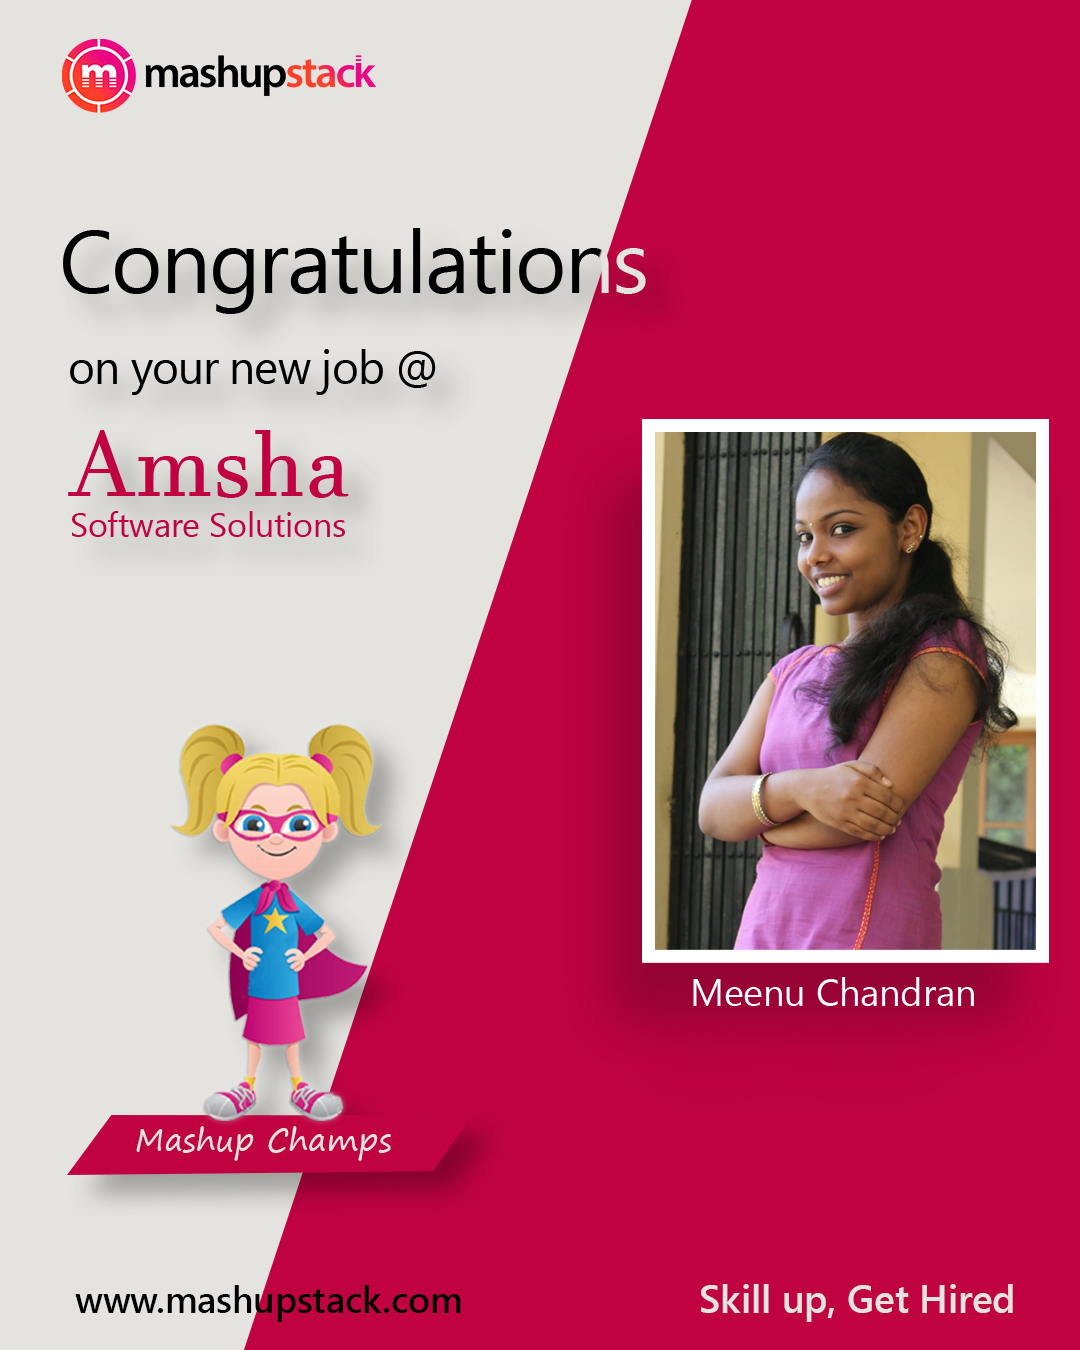 Mashupstack Meenu chandran-Amsha Software Solutions